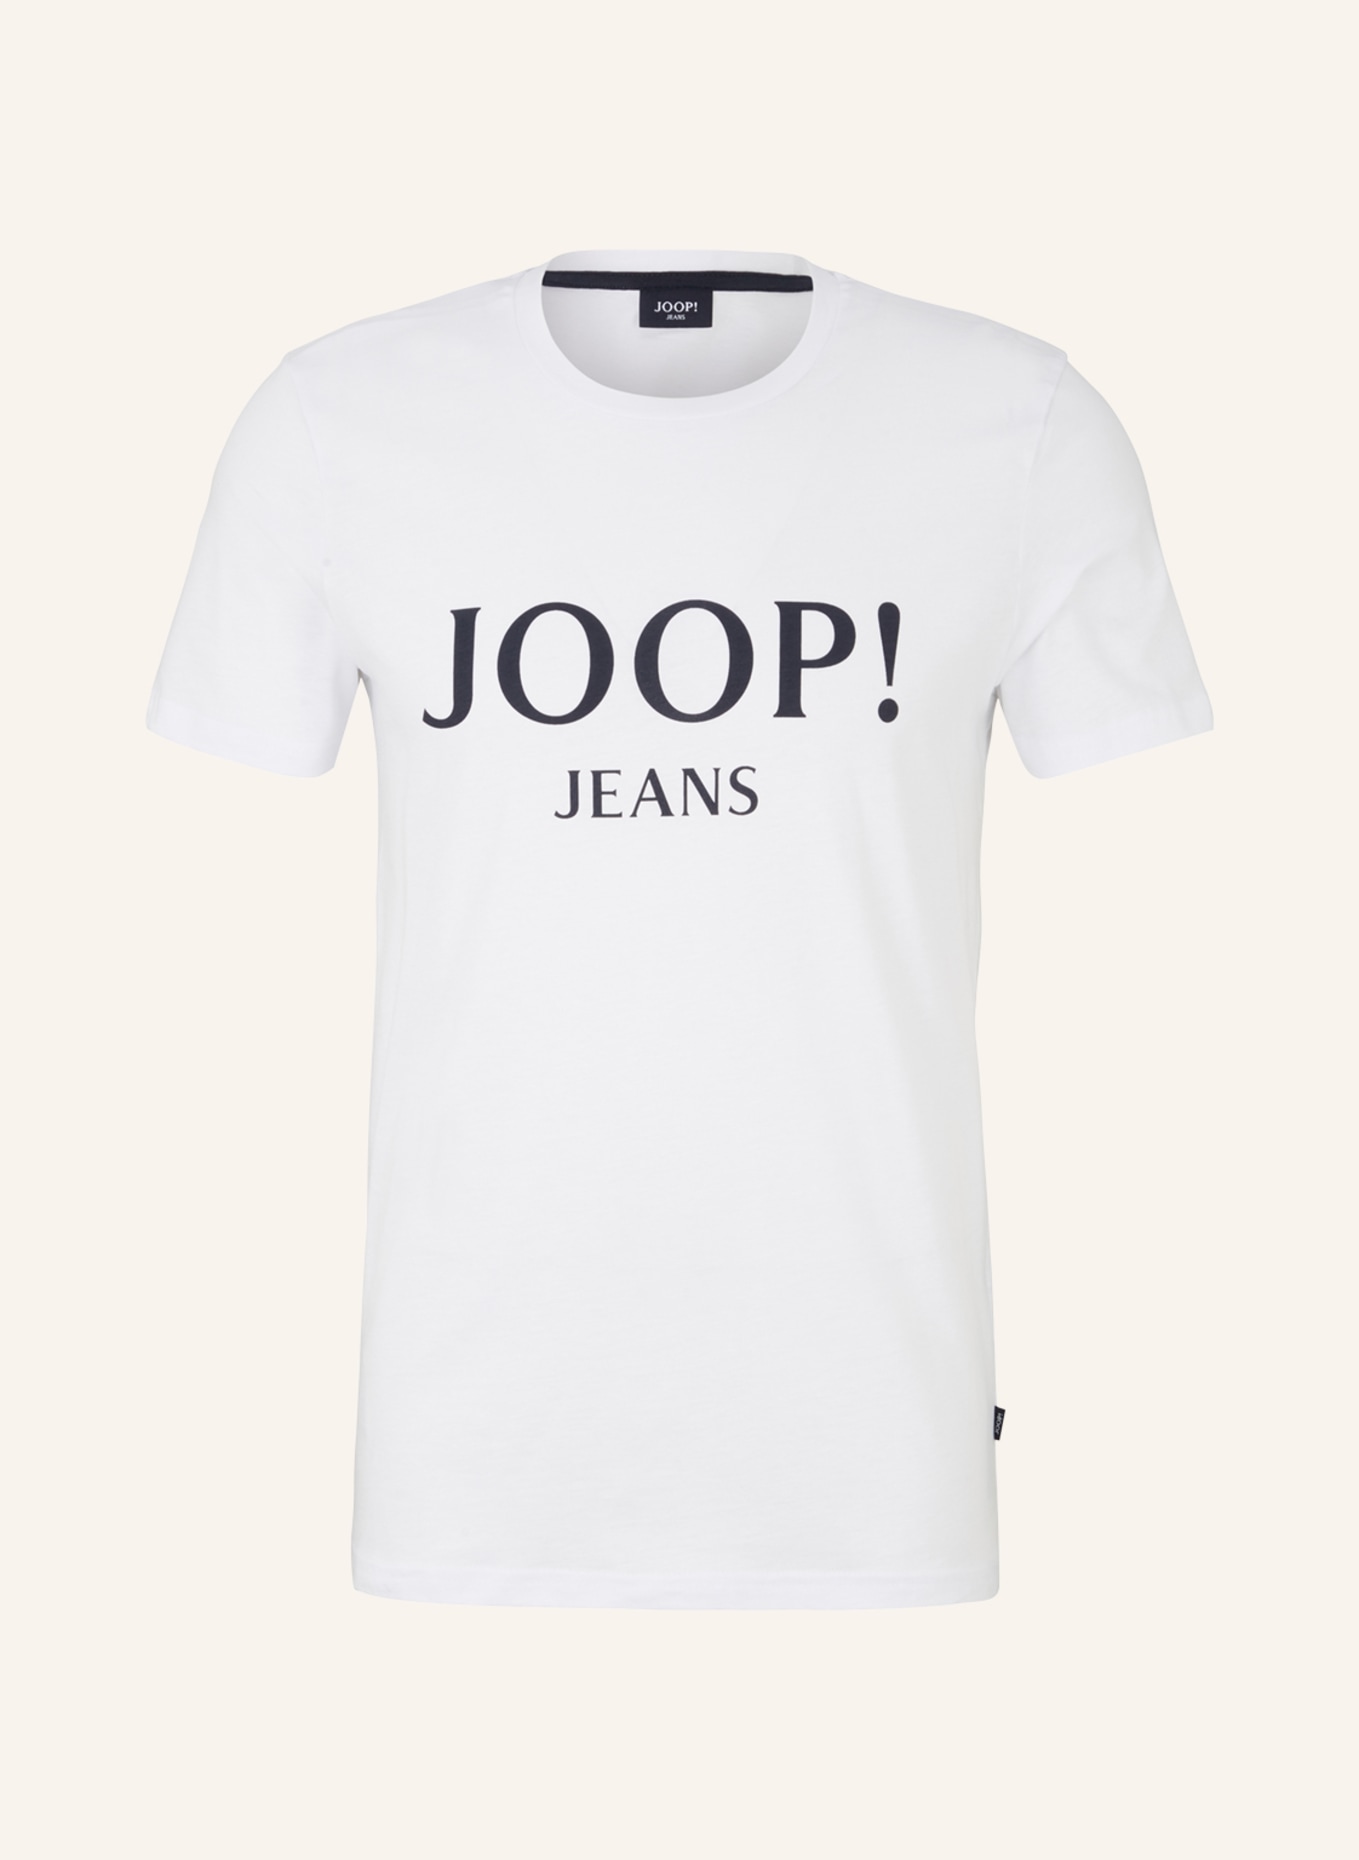 JOOP! JEANS T-Shirt, Farbe: WEISS (Bild 1)